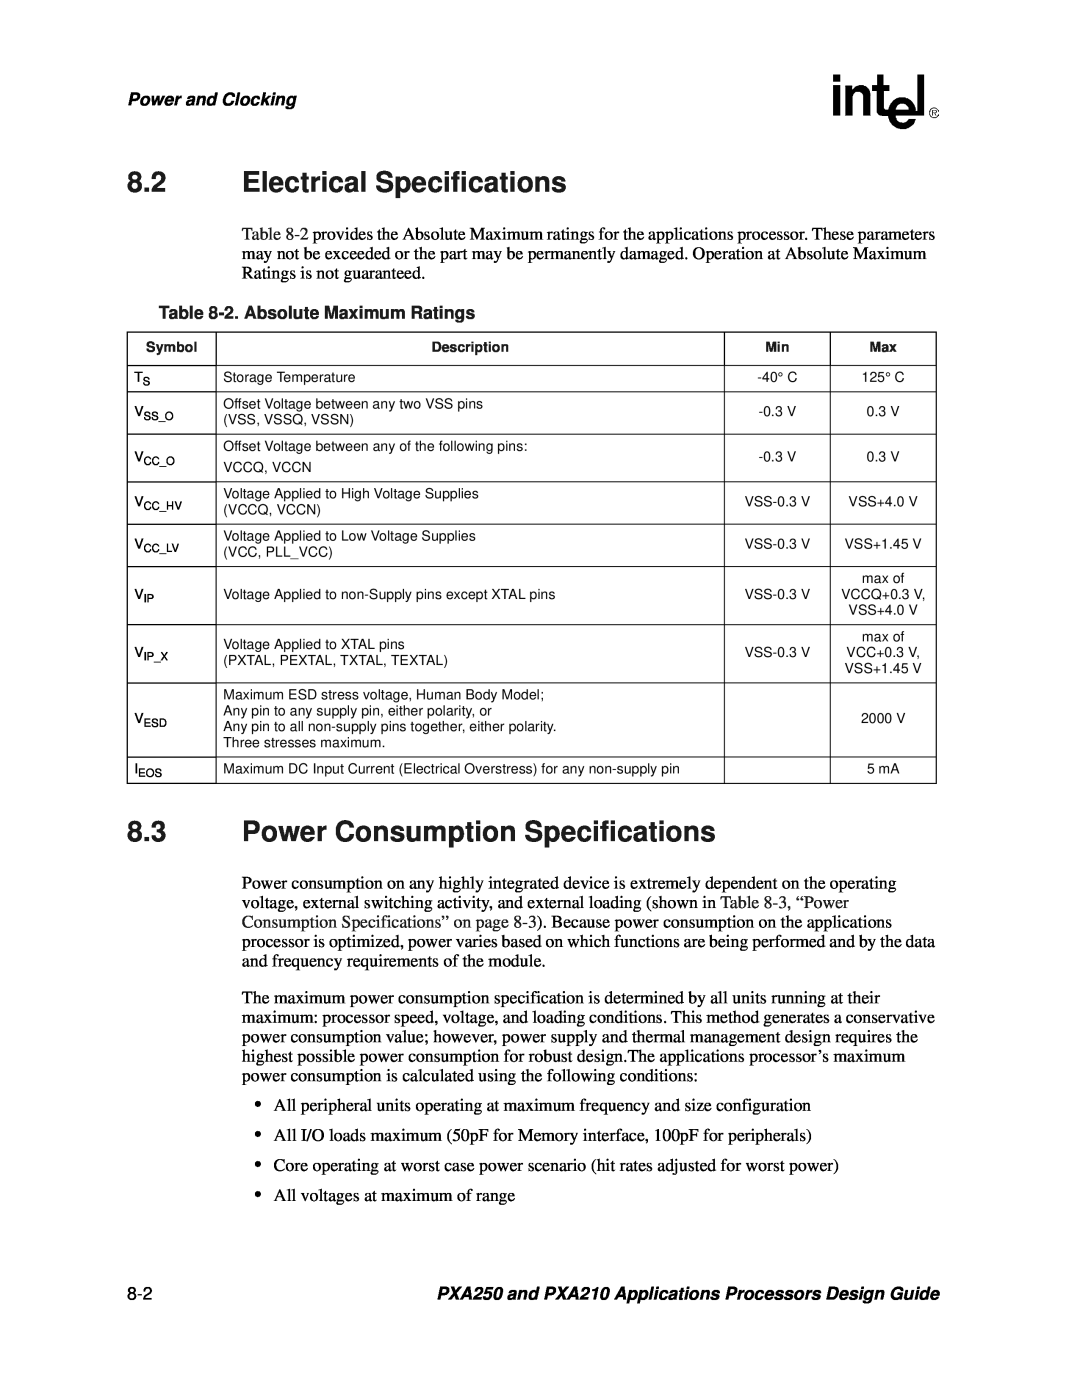 Intel PXA250 and PXA210 manual Electrical Specifications, Power Consumption Specifications, Power and Clocking 